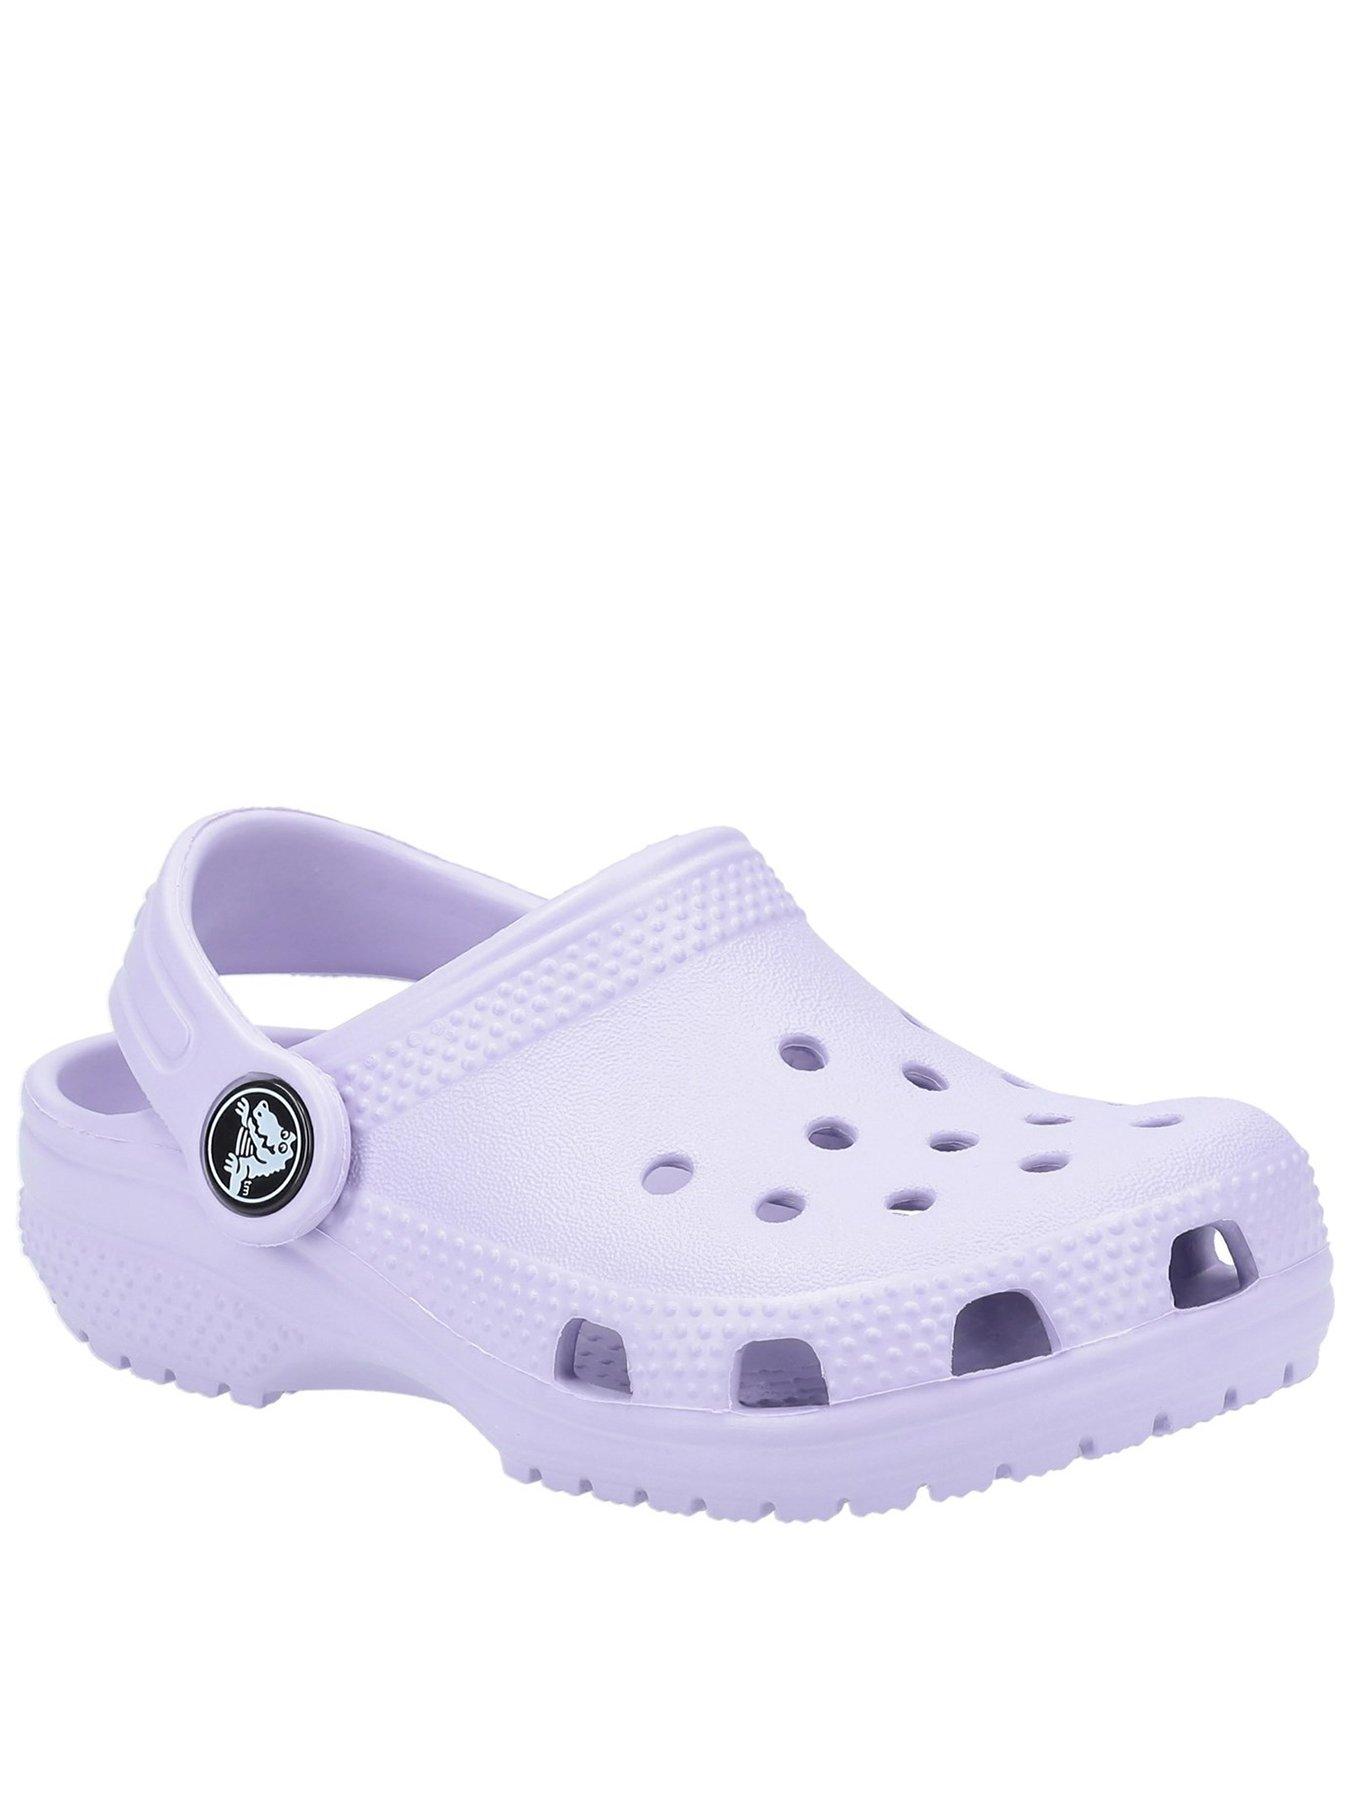 Crocs Girls Classic Slip On Clog 